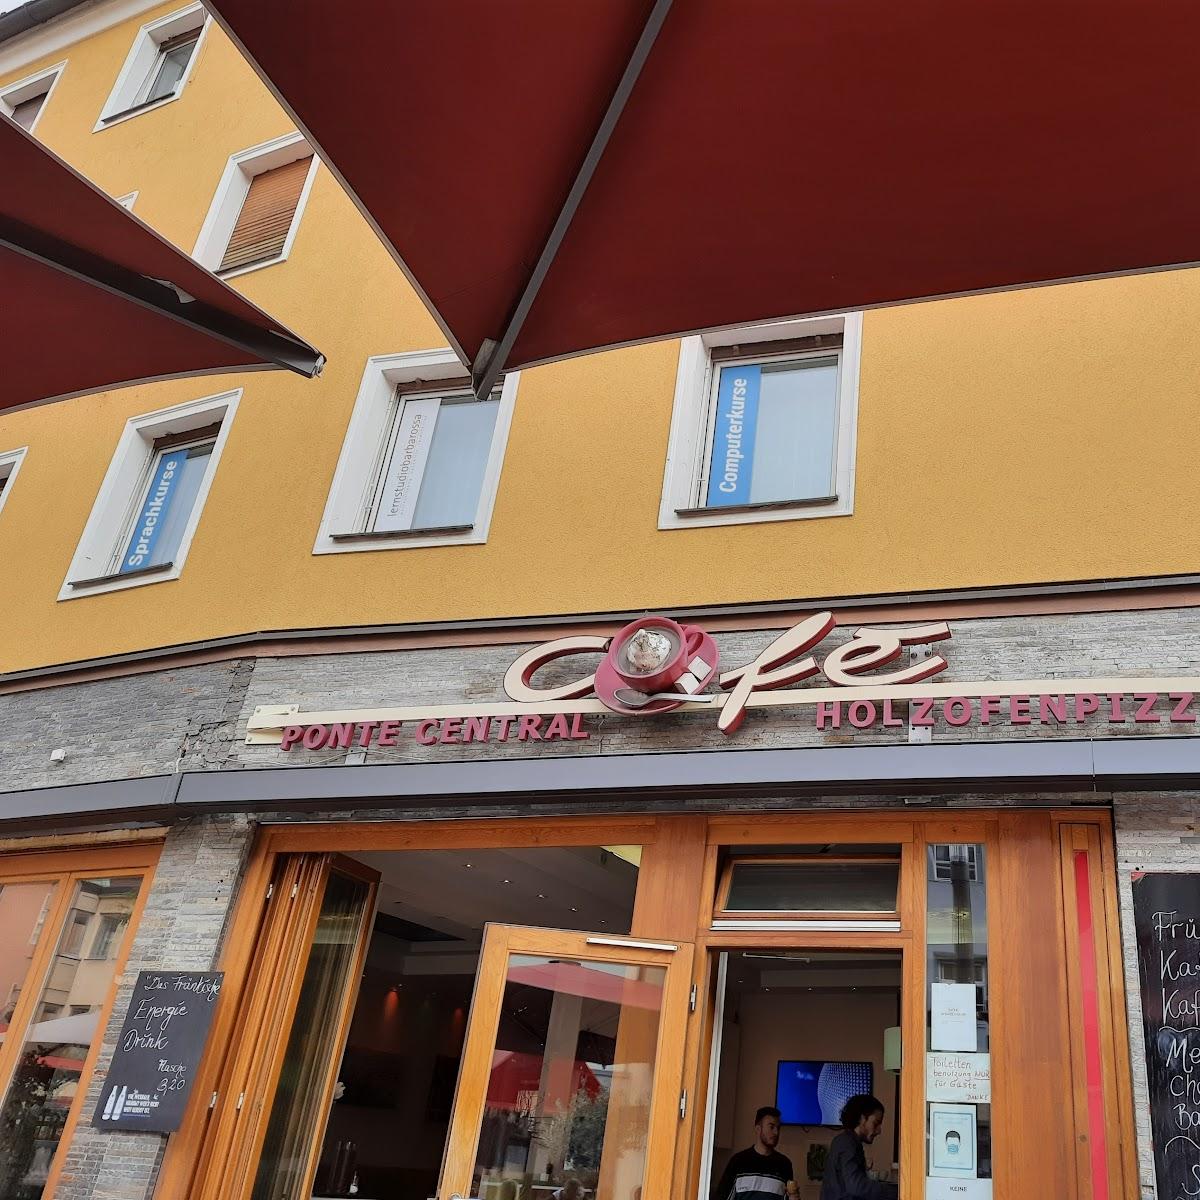 Restaurant "Ponte Central-Cafe" in Bayreuth